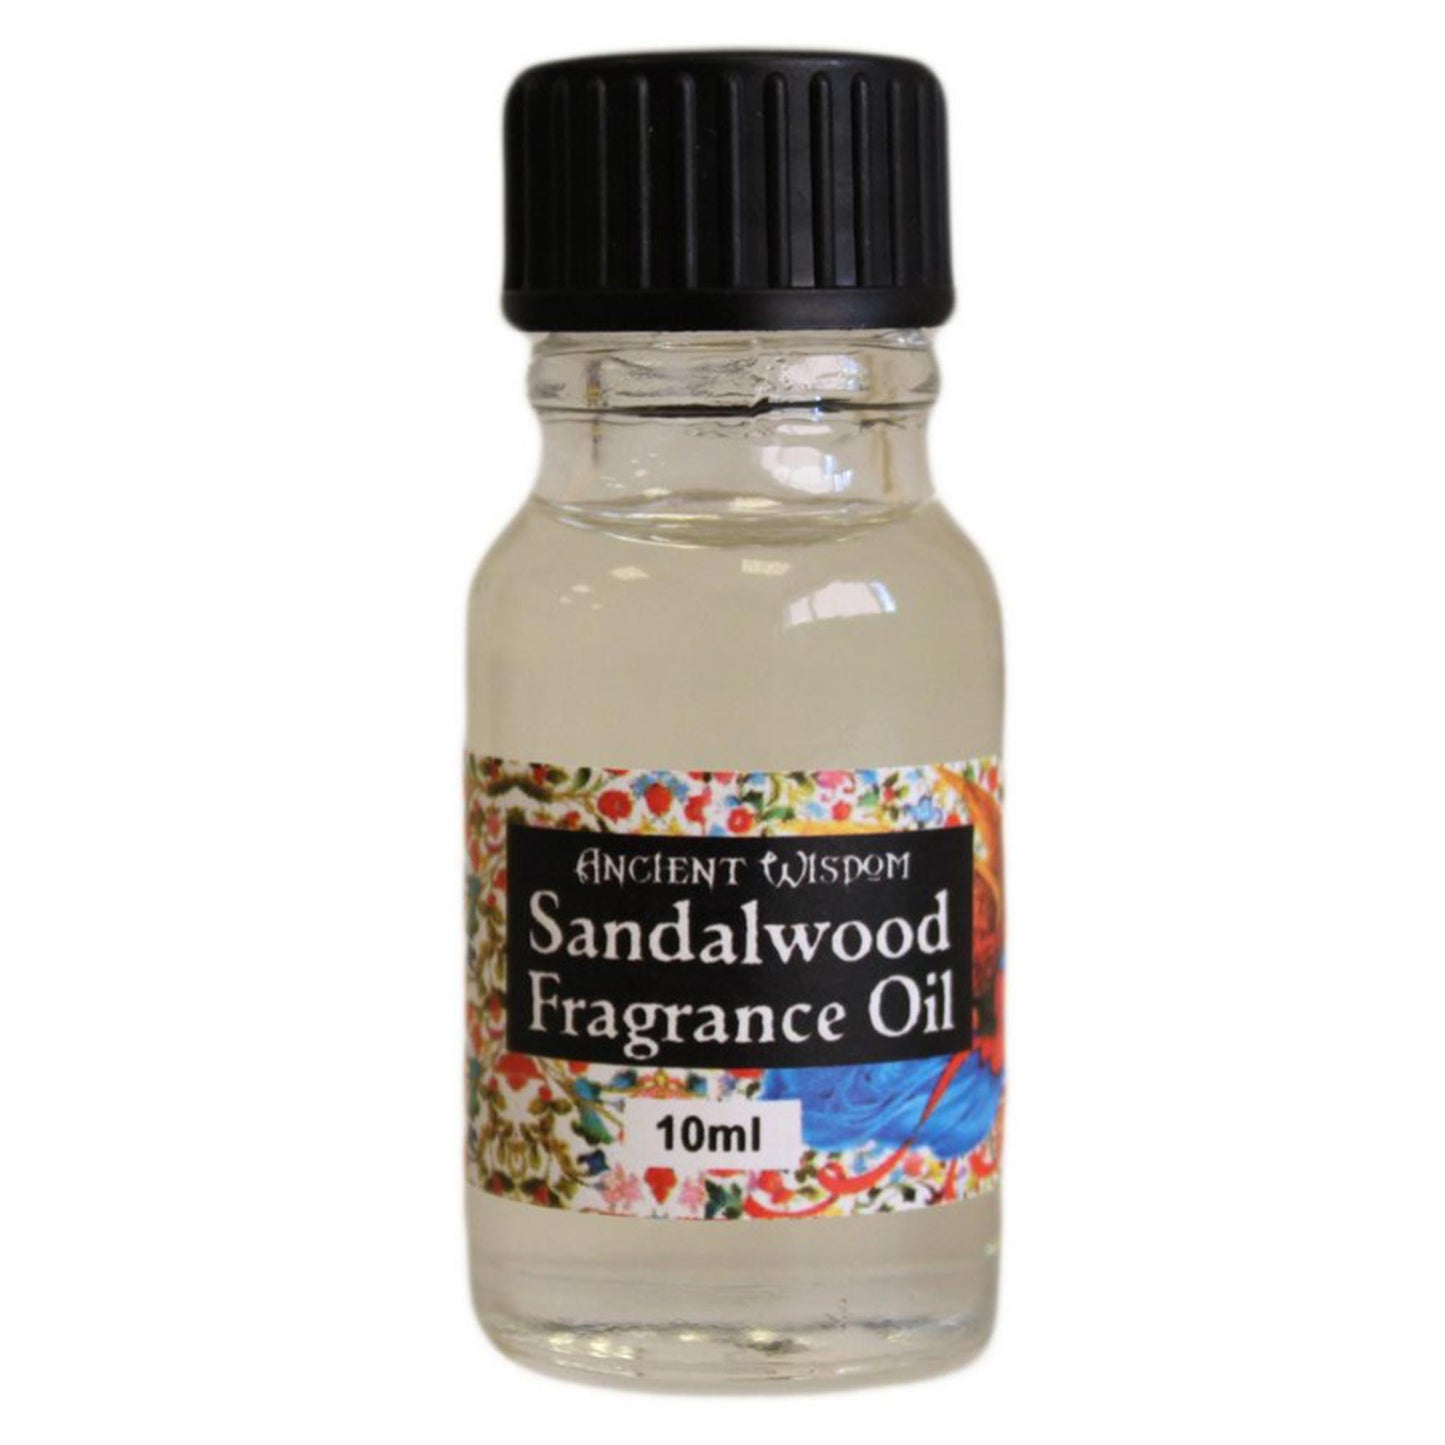 10ml Xmas Sandalwood Fragrance